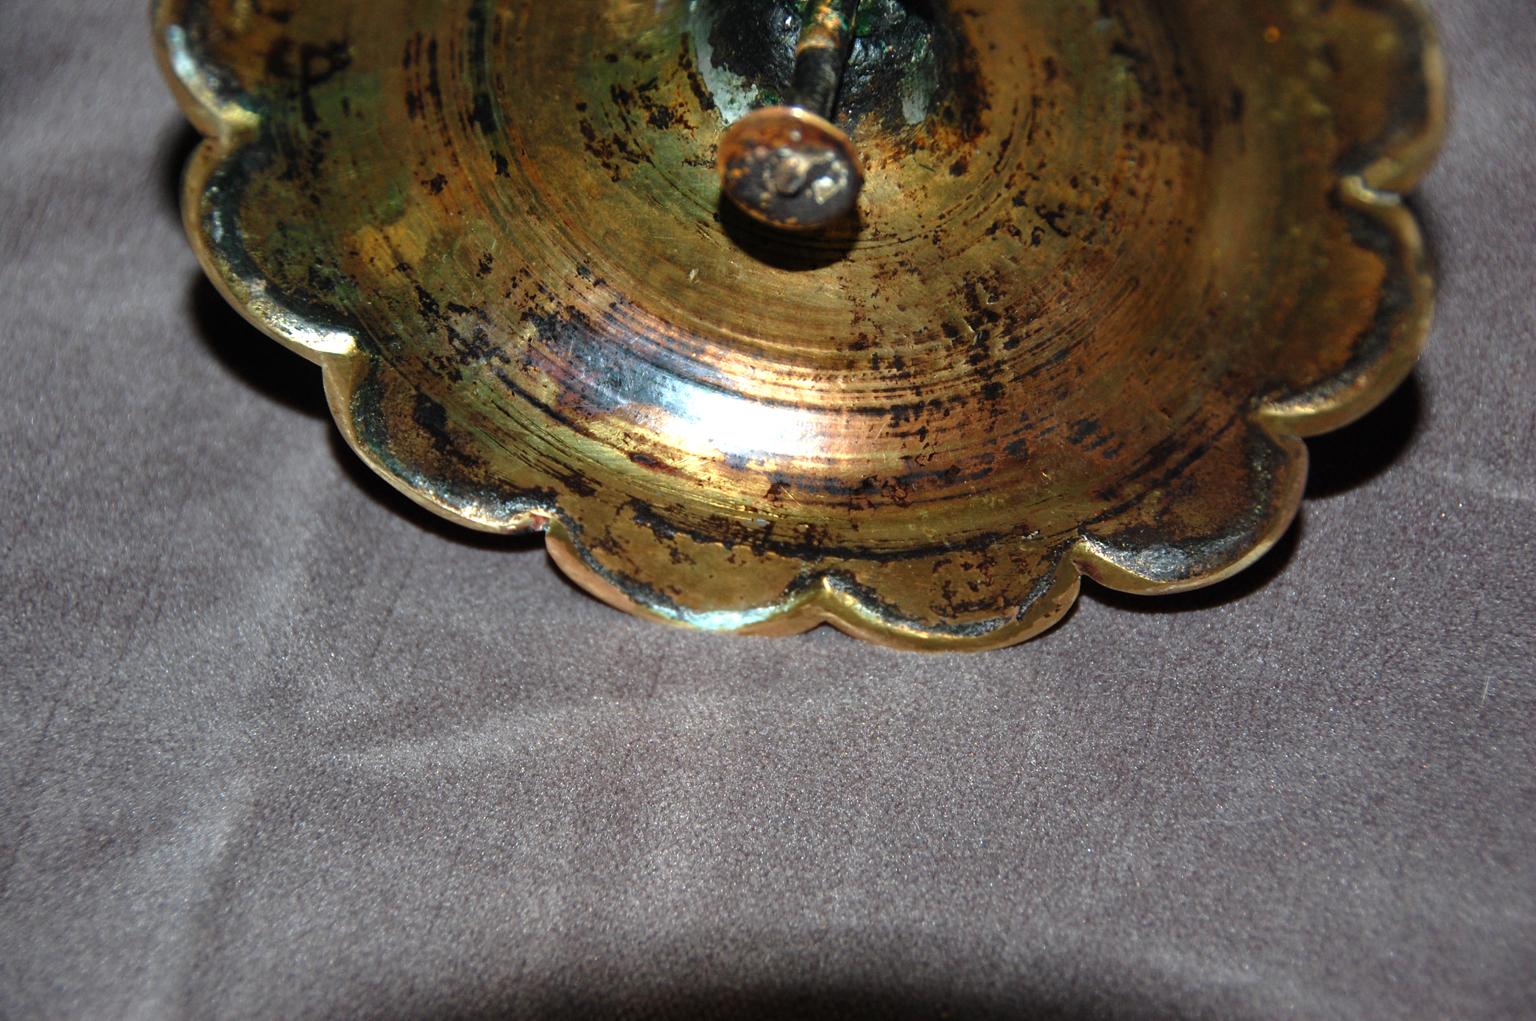 18th century brass candlesticks